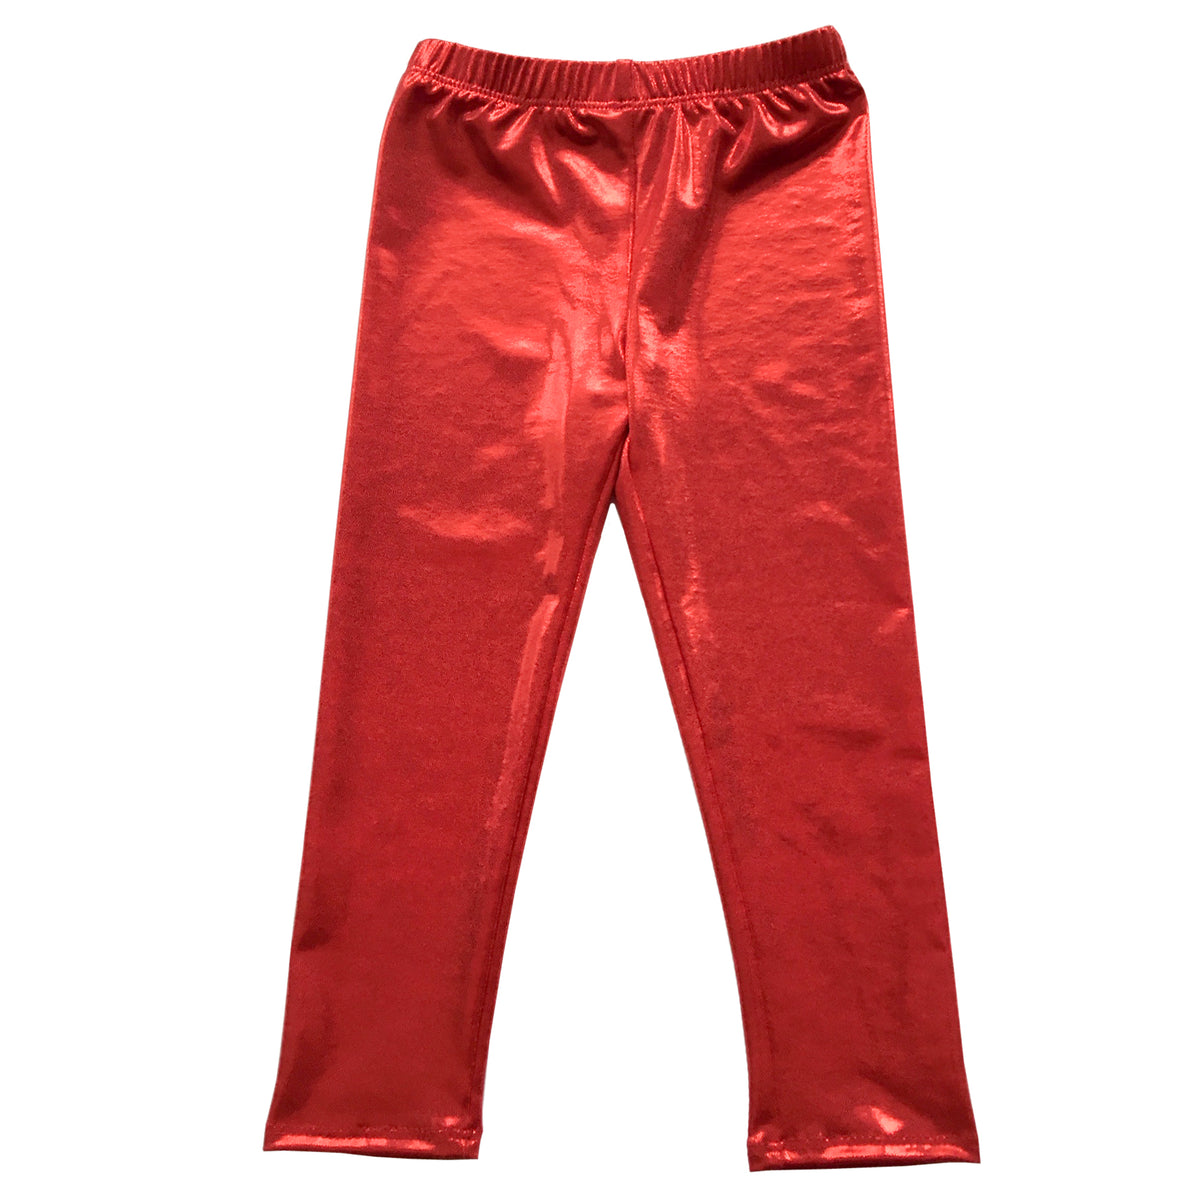 Metallic Red Leggings